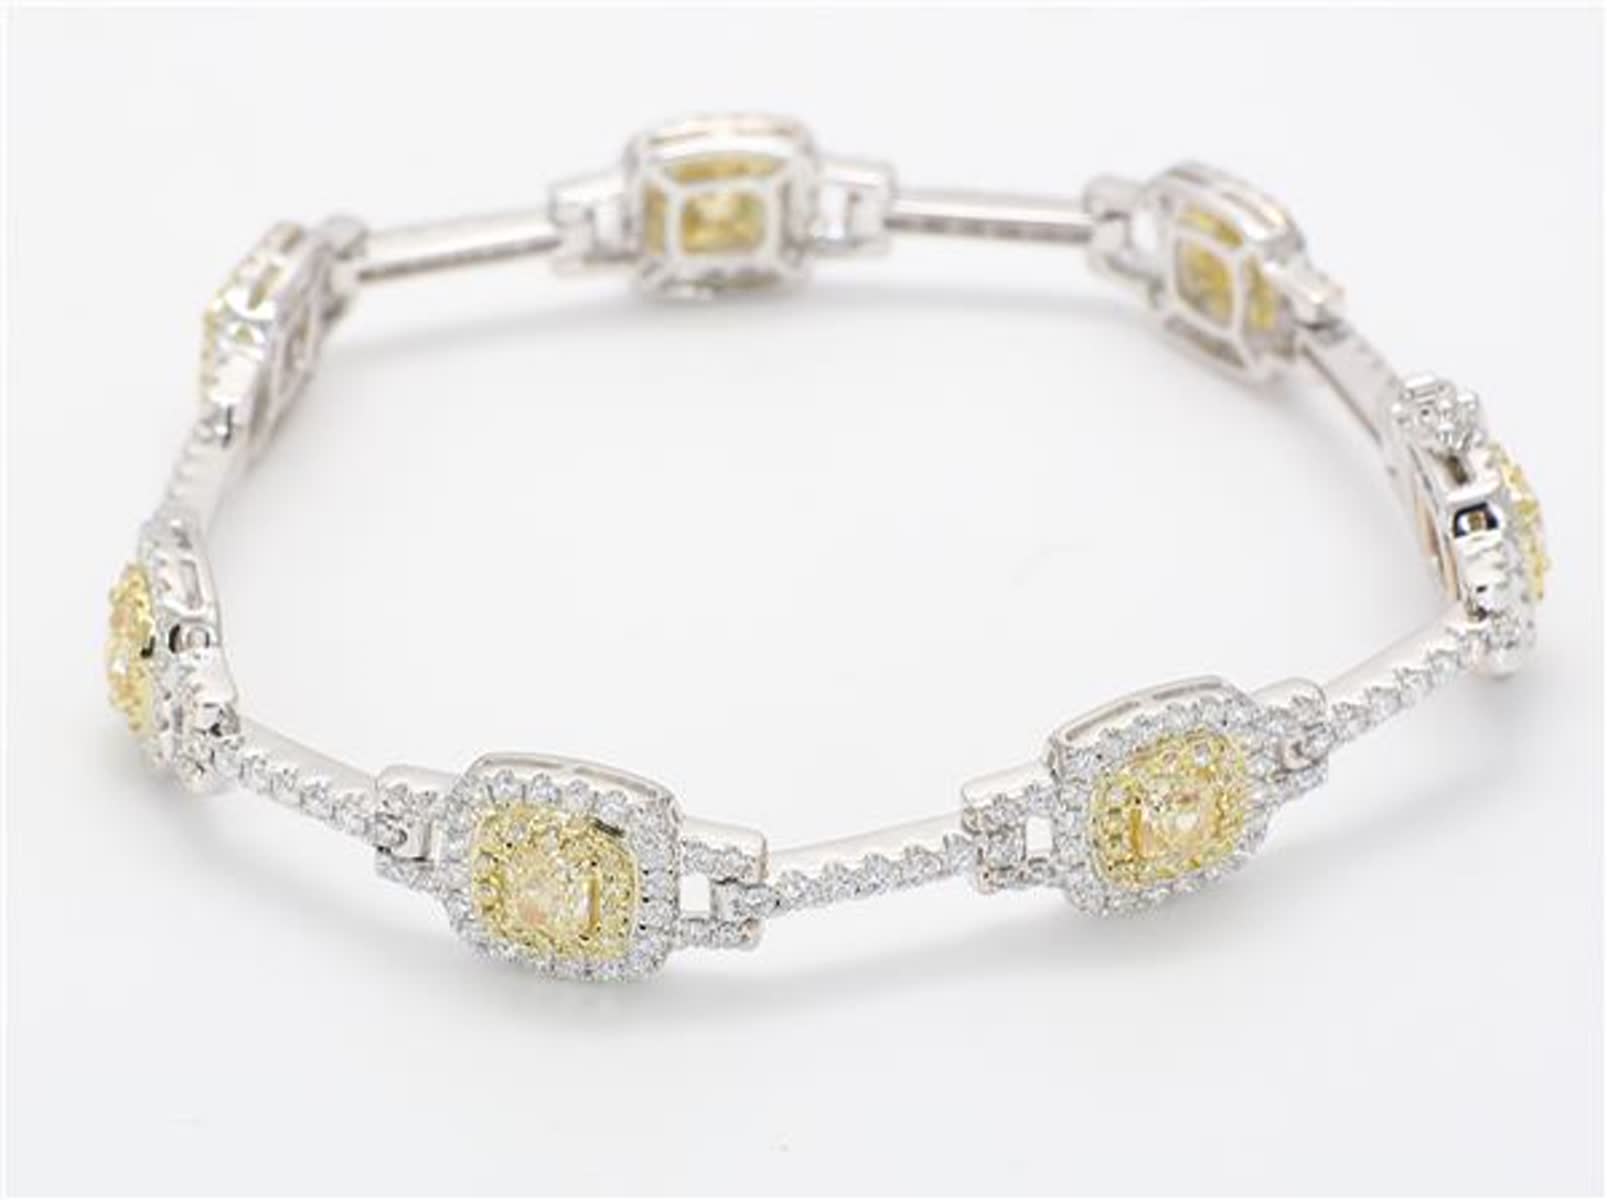 Natural Yellow Radiant and White Diamond 5.48 Carat TW Gold Bracelet